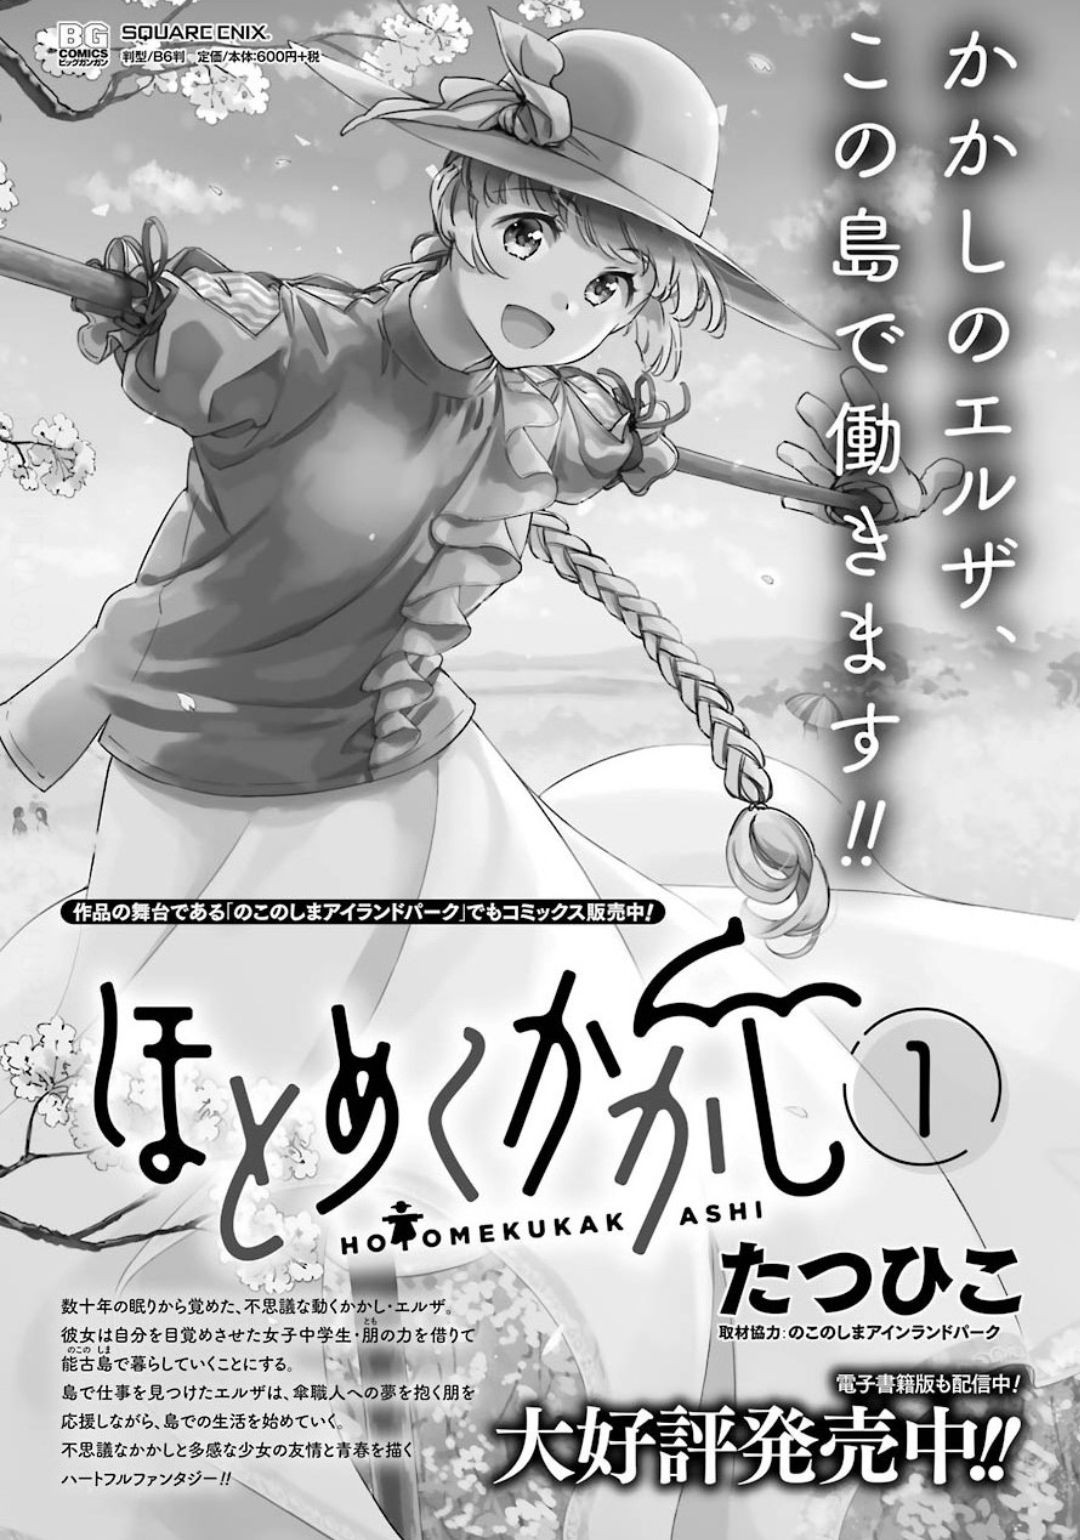 Hotomeku-kakashi - Chapter 06-2 - Page 1